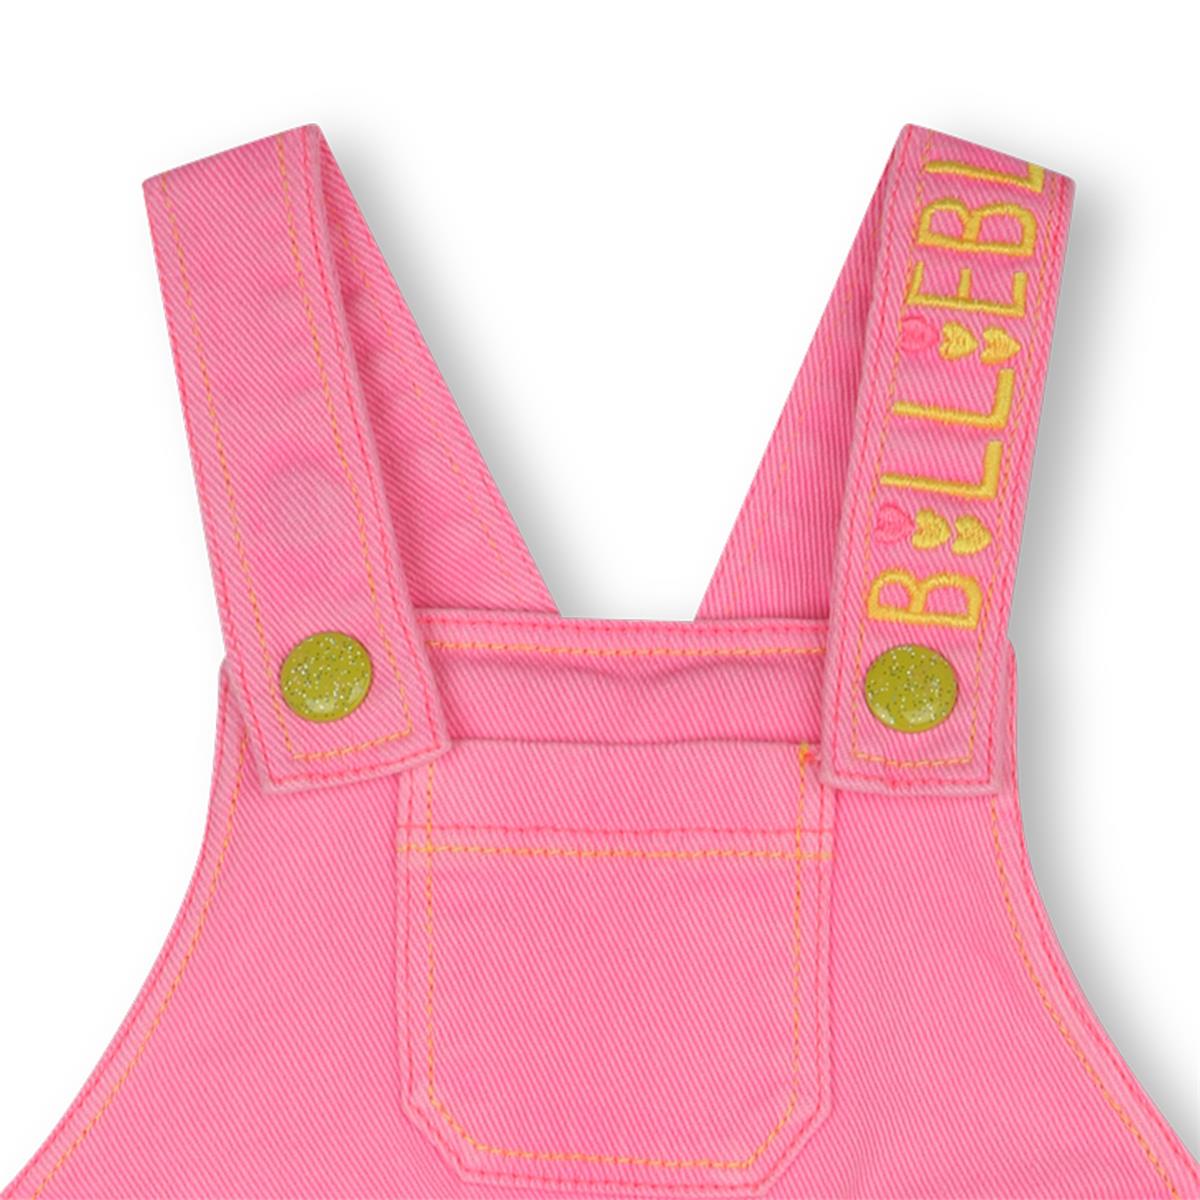 Baby Girls Pink Jumpsuit